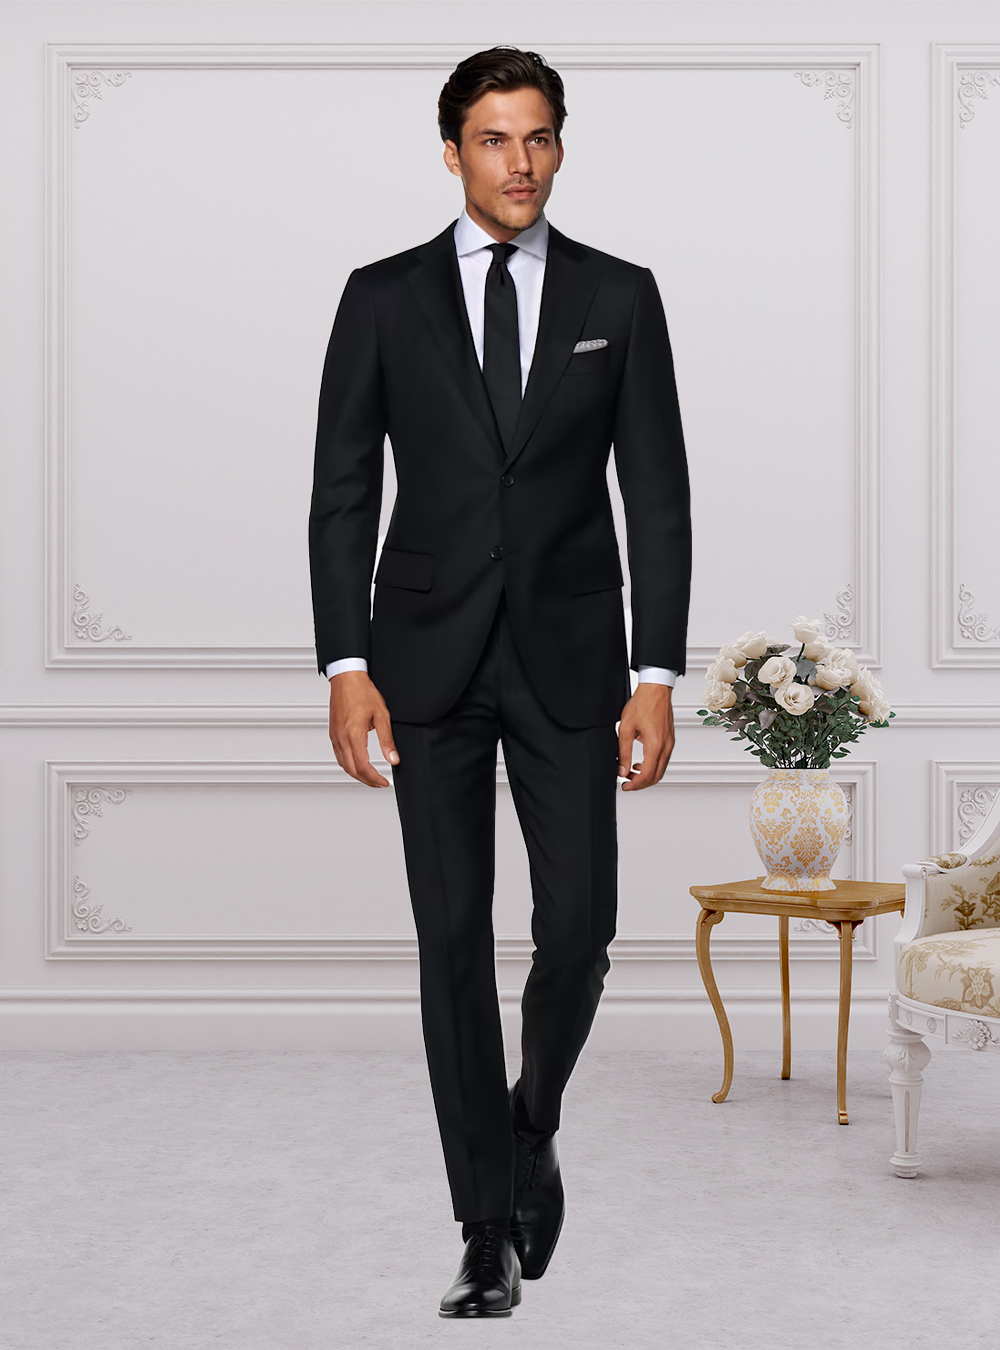 black suit. white dress shirt, black tie, and black Oxford shoes